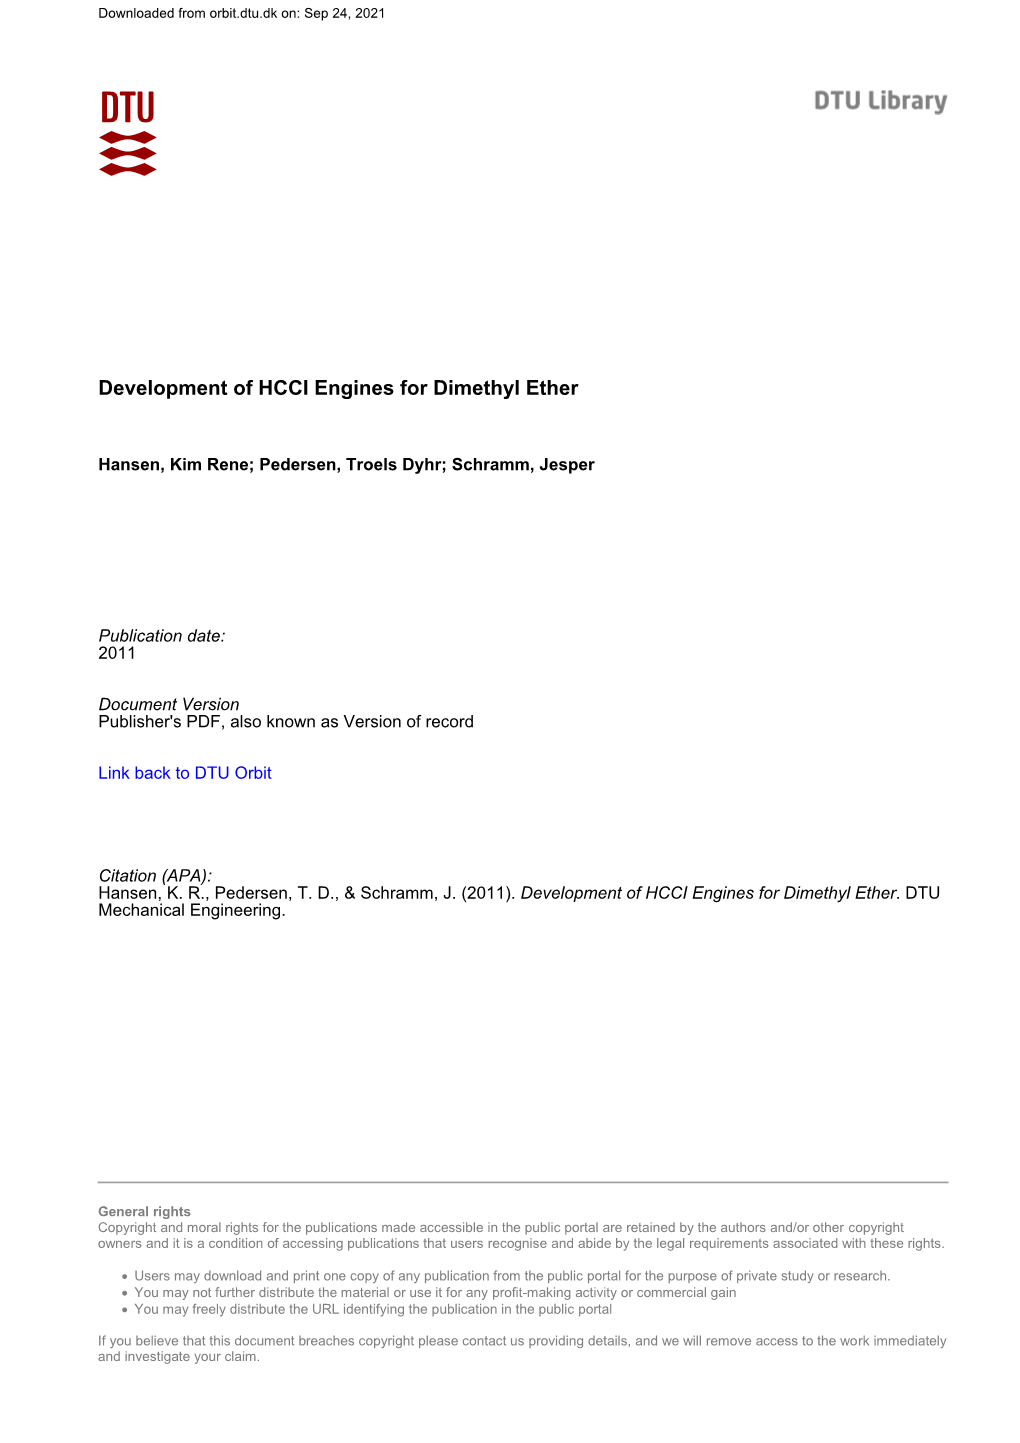 Development of HCCI Engines for Dimethyl Ether